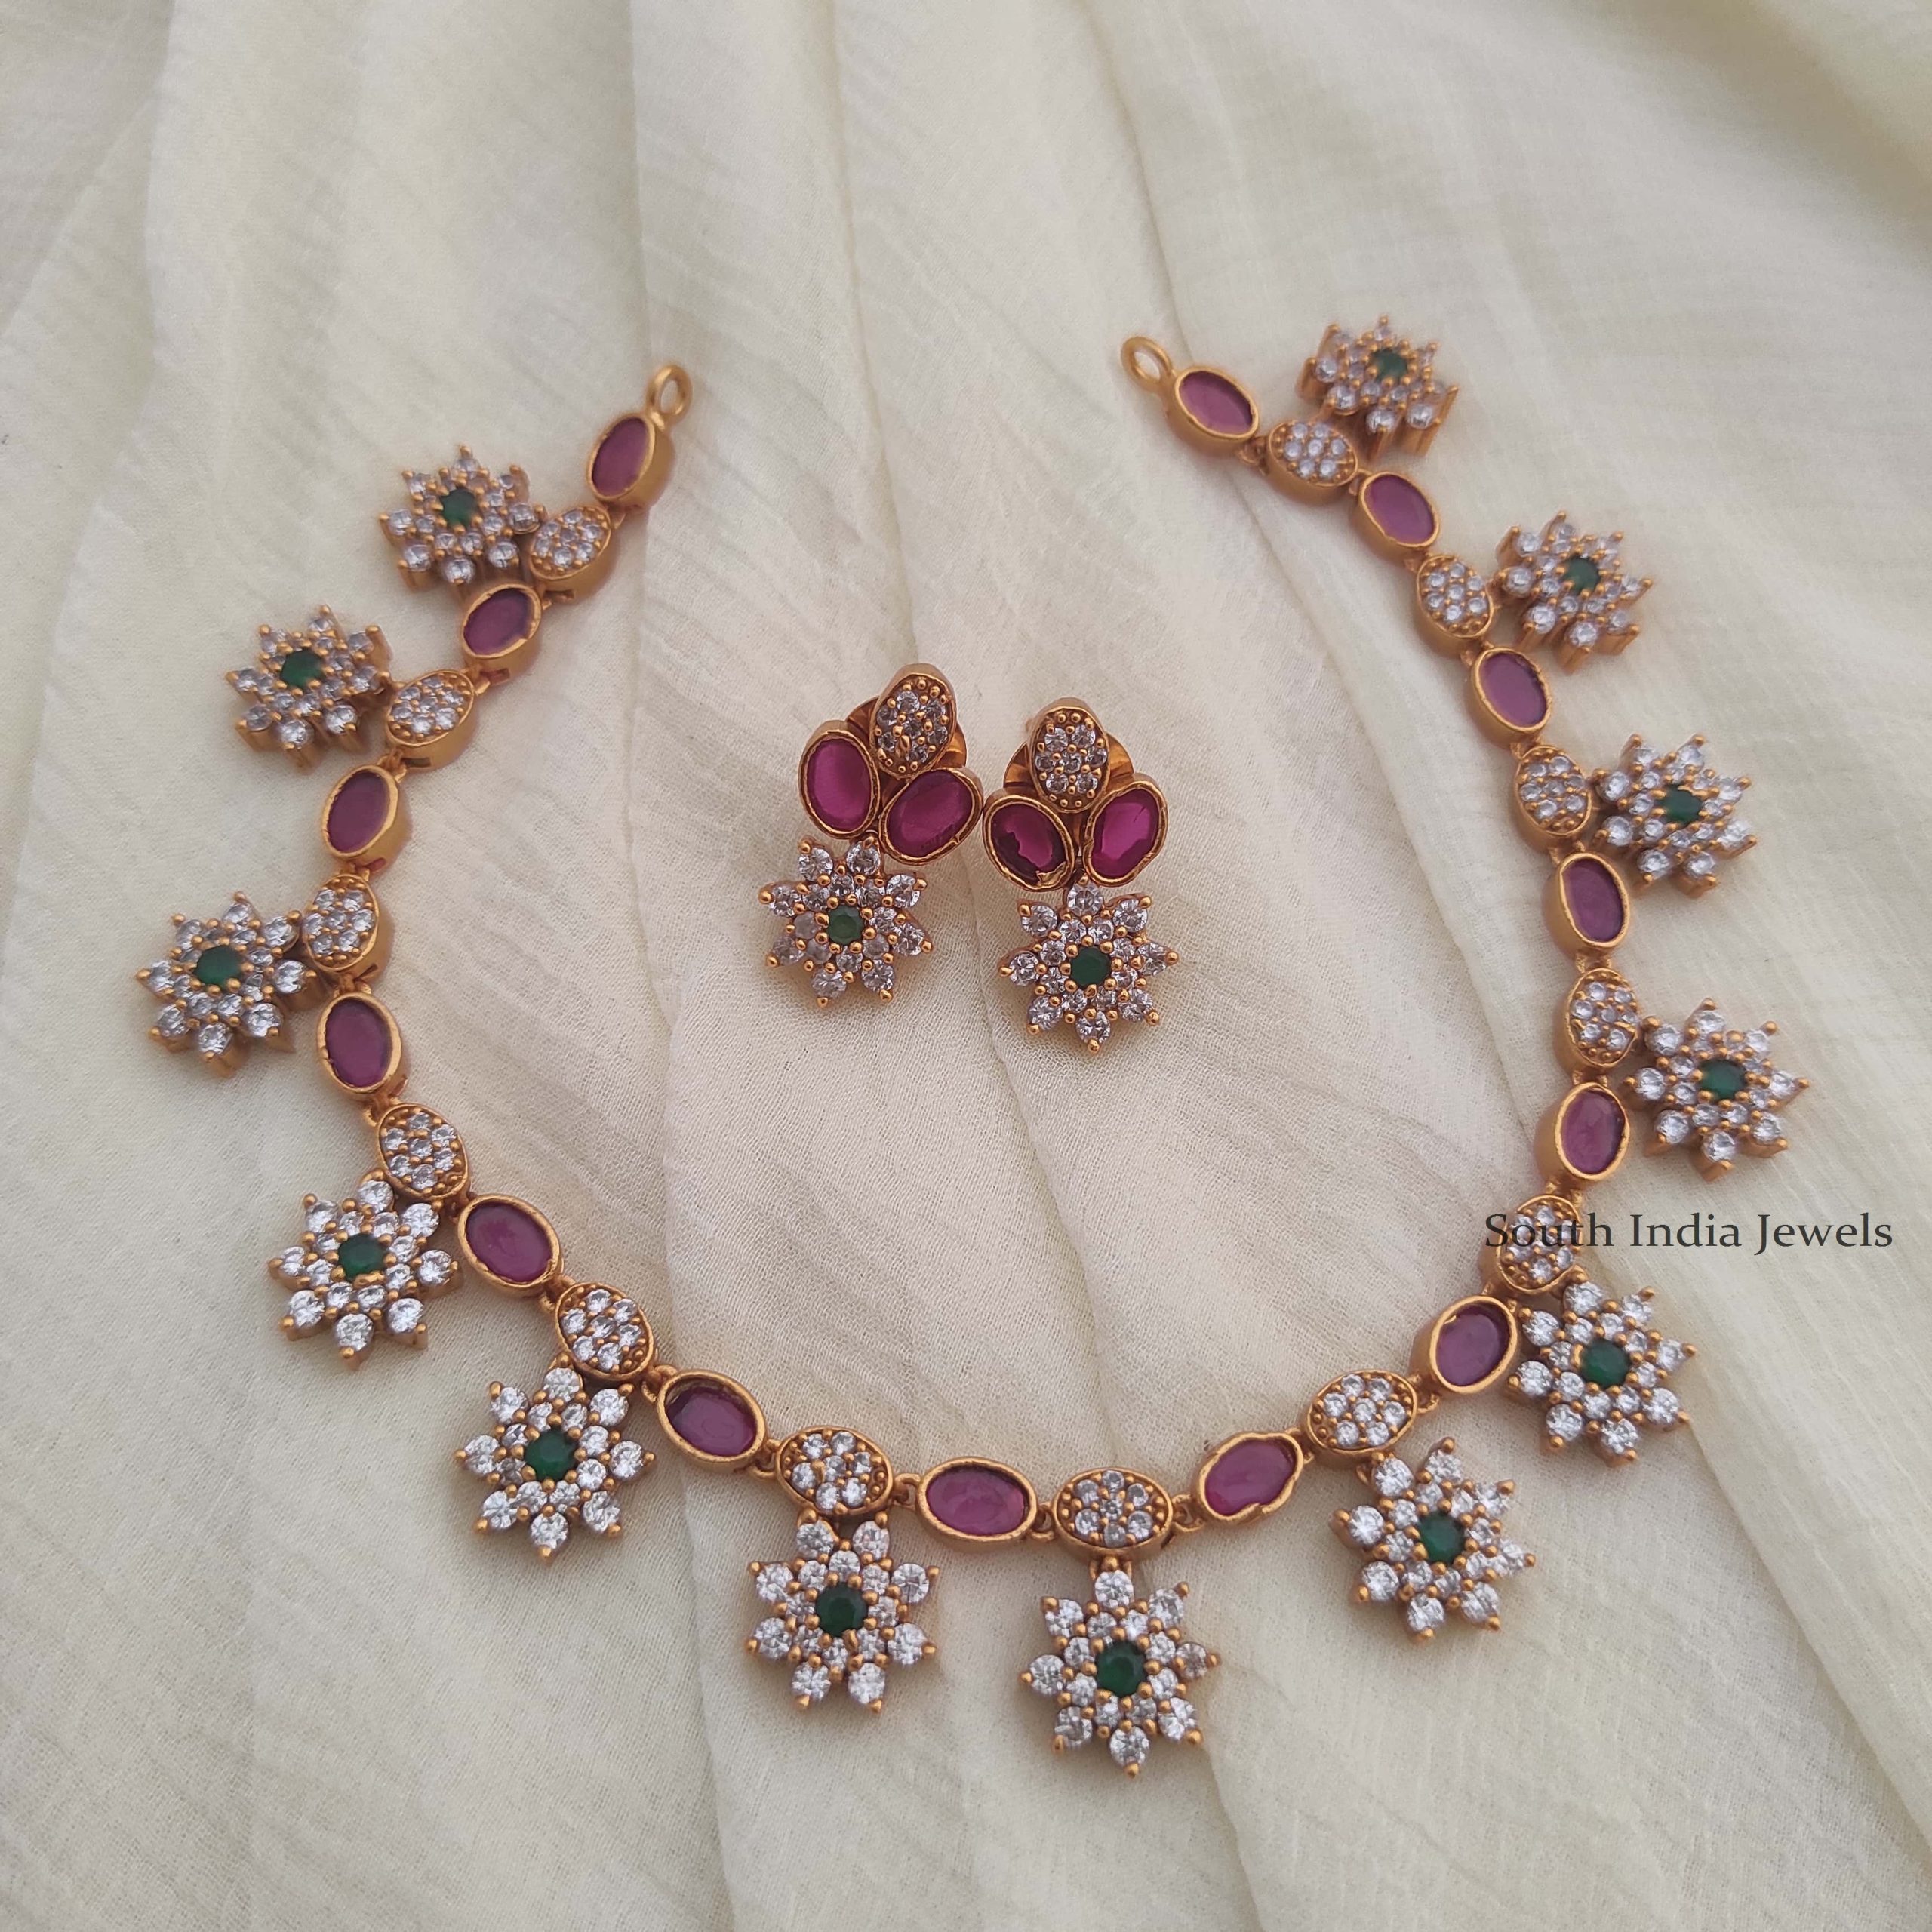 Flower Design CZ Stone Necklace | Necklace Set - South India Jewels